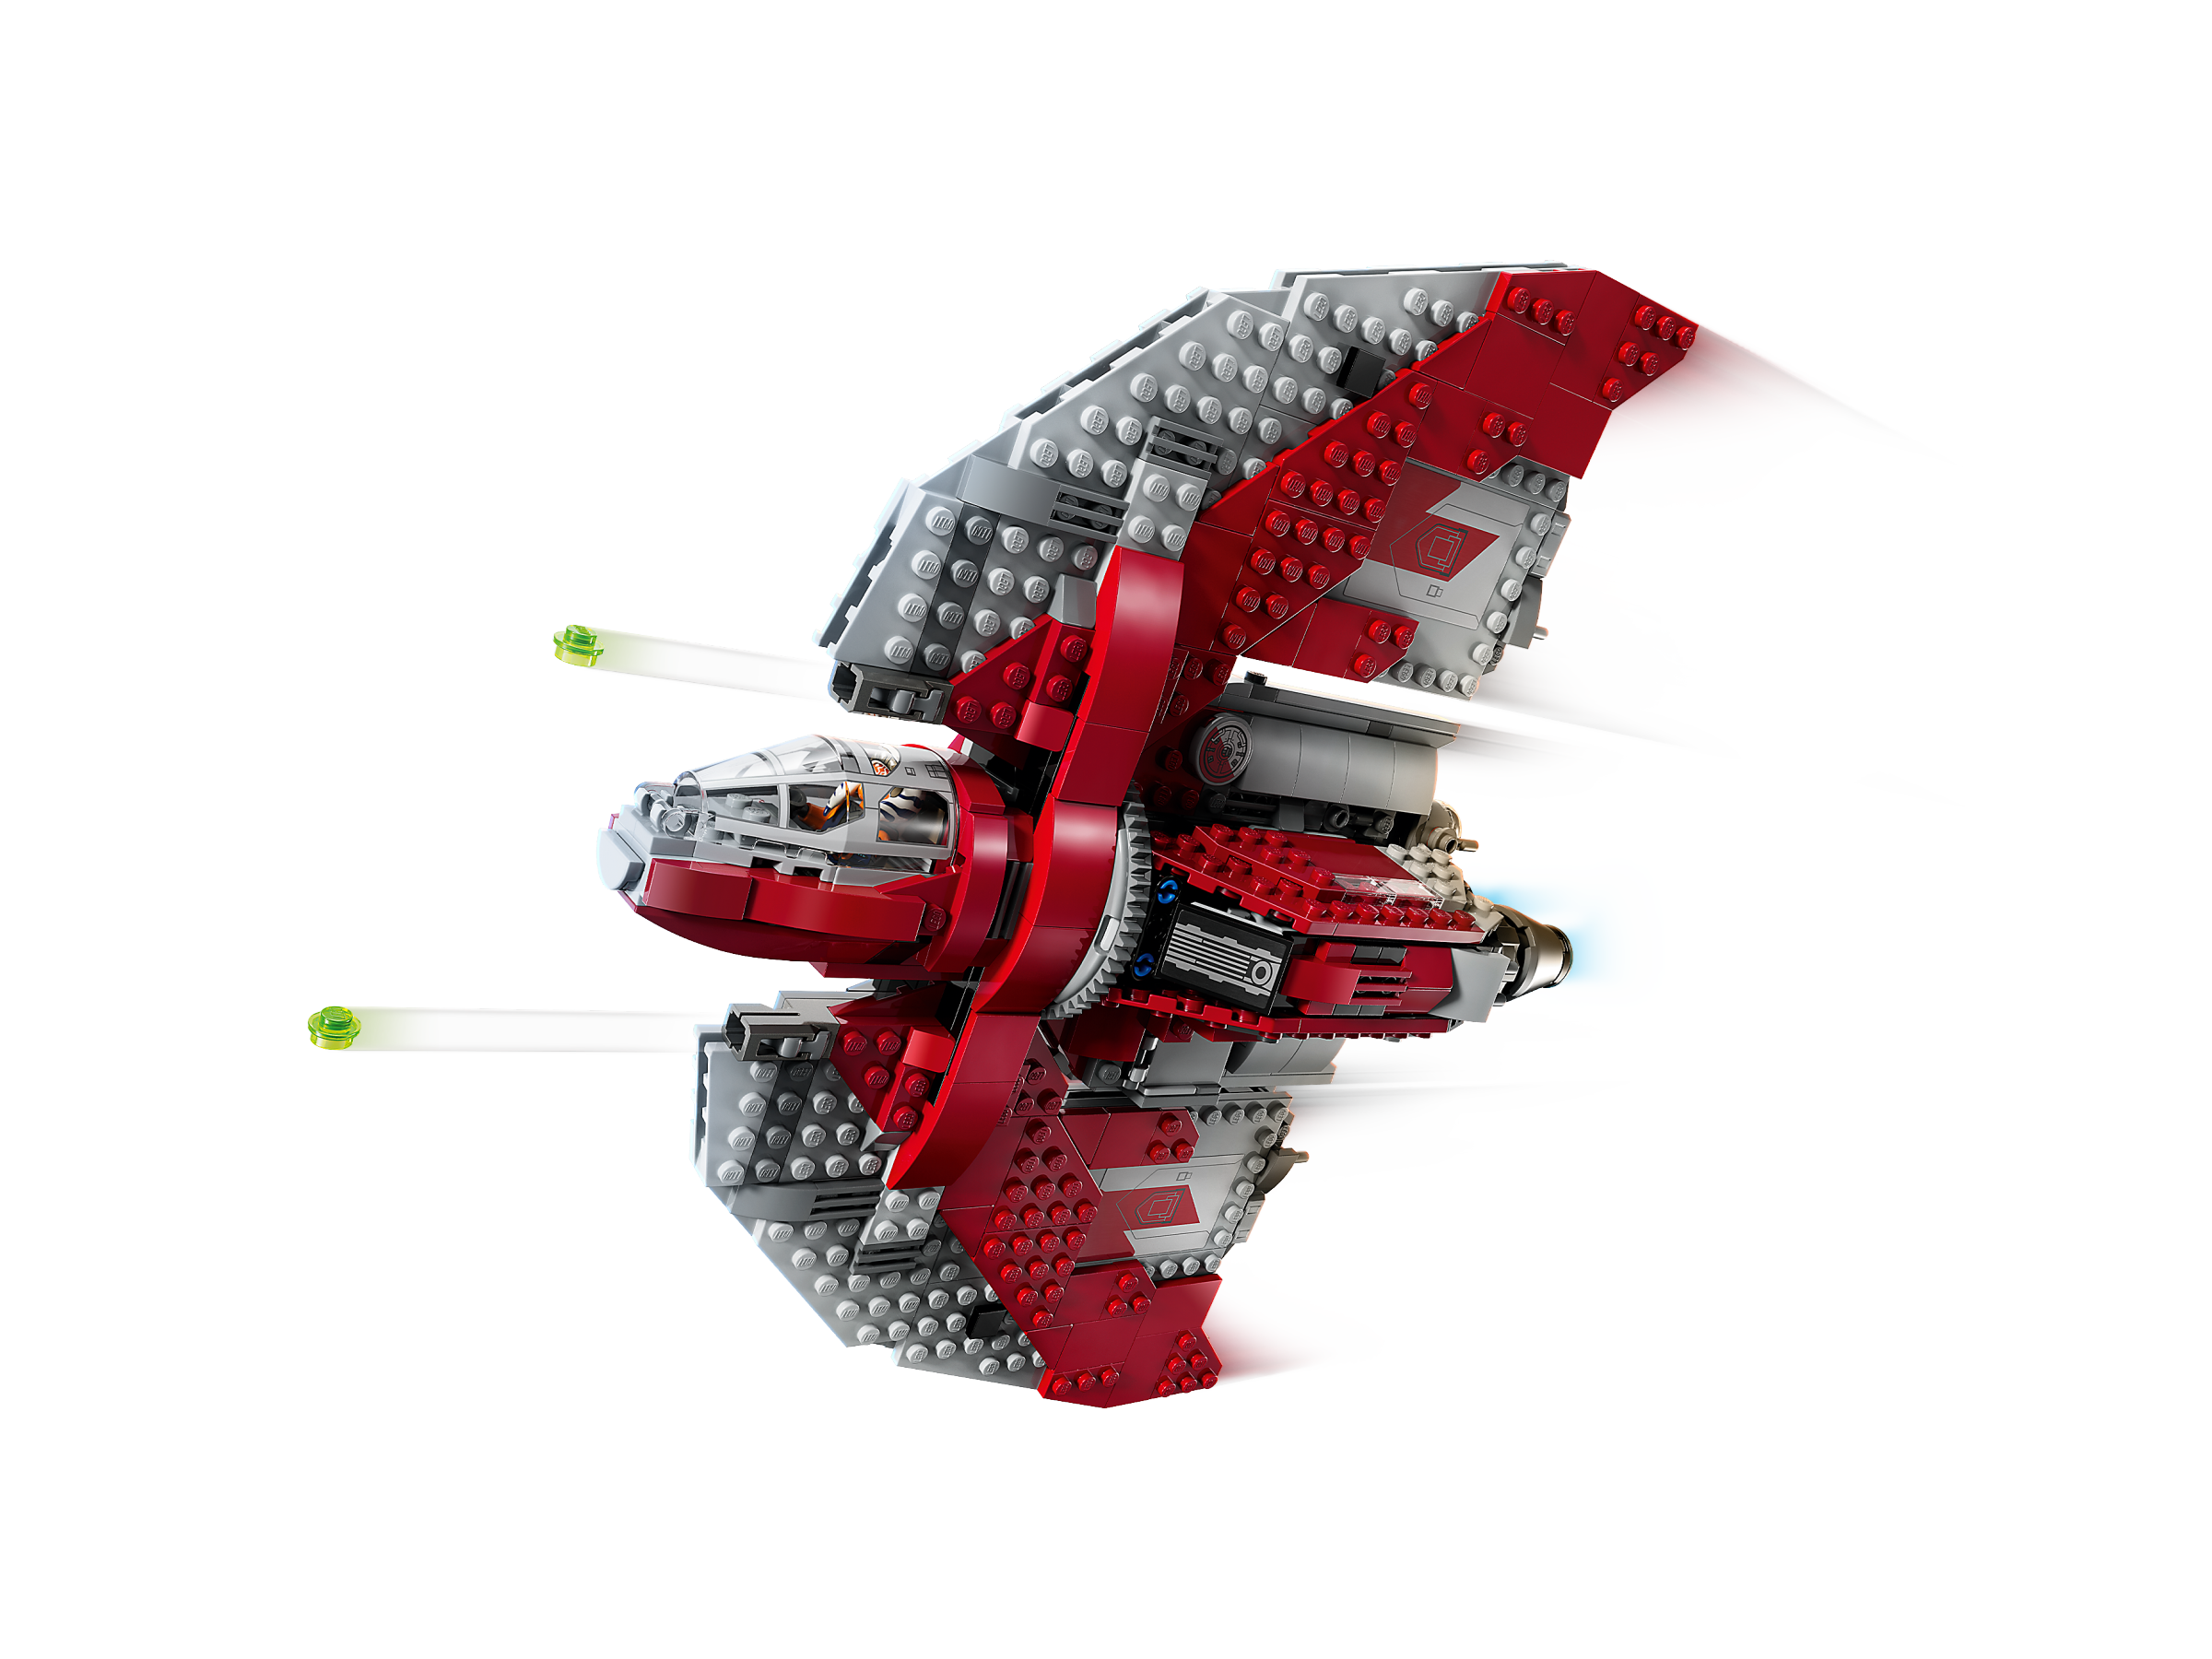 LEGO® 75362 La navette Jedi T-6 d'Ahsoka Tano - ToyPro